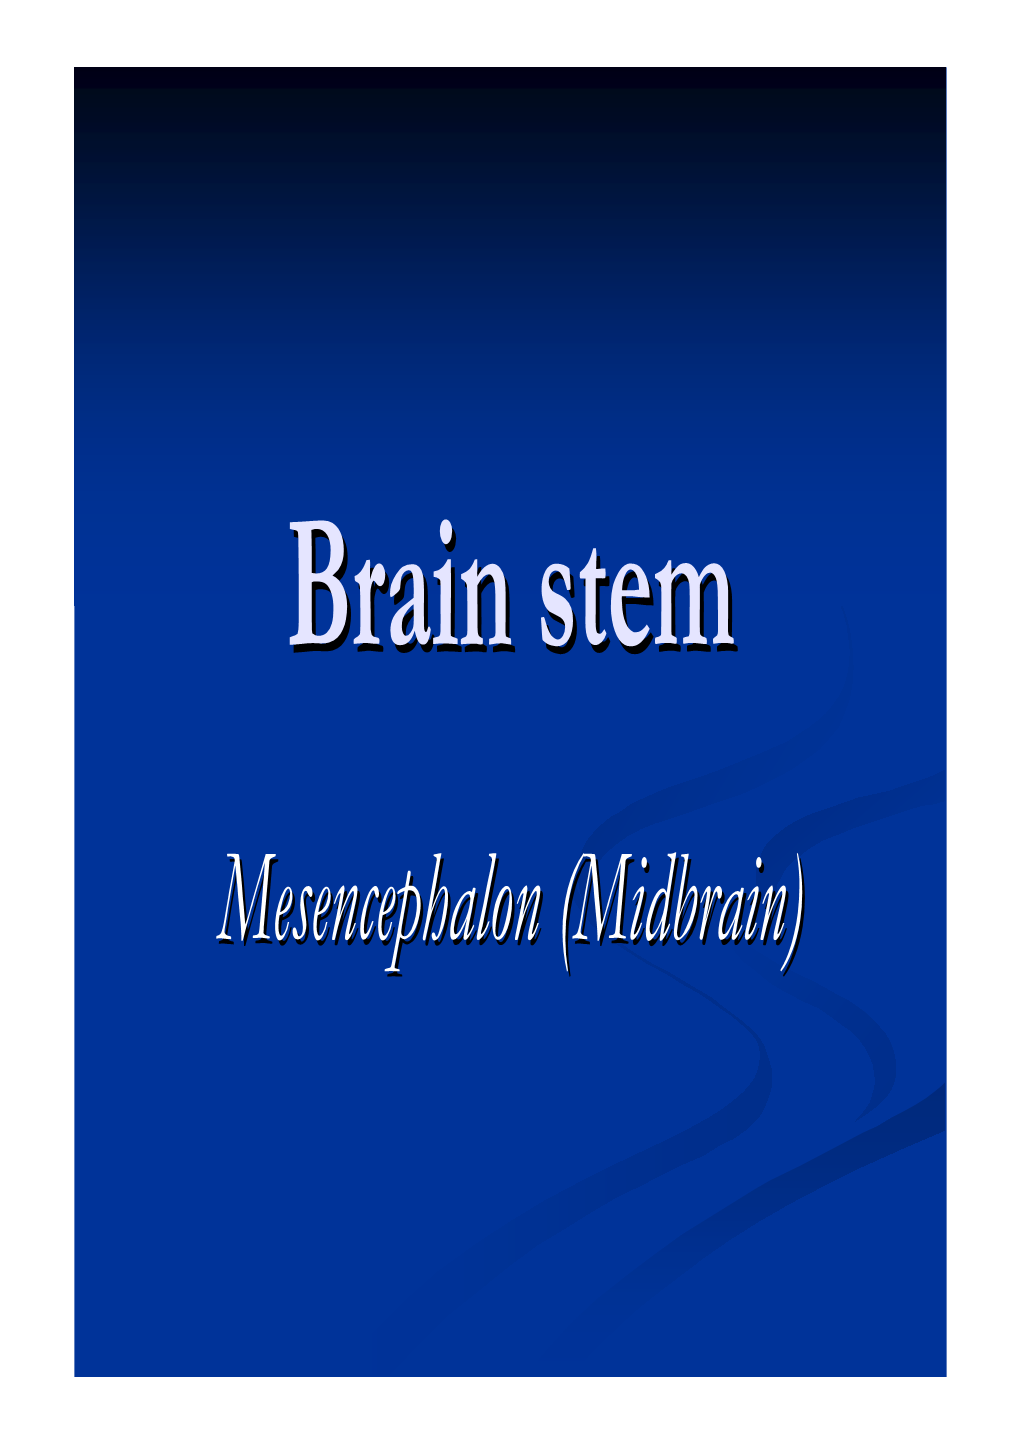 Mesencephalon (Midbrain)(Midbrain) CNSCNS Divisionsdivisions Midbrainmidbrain –– Boundariesboundaries && Sizesize